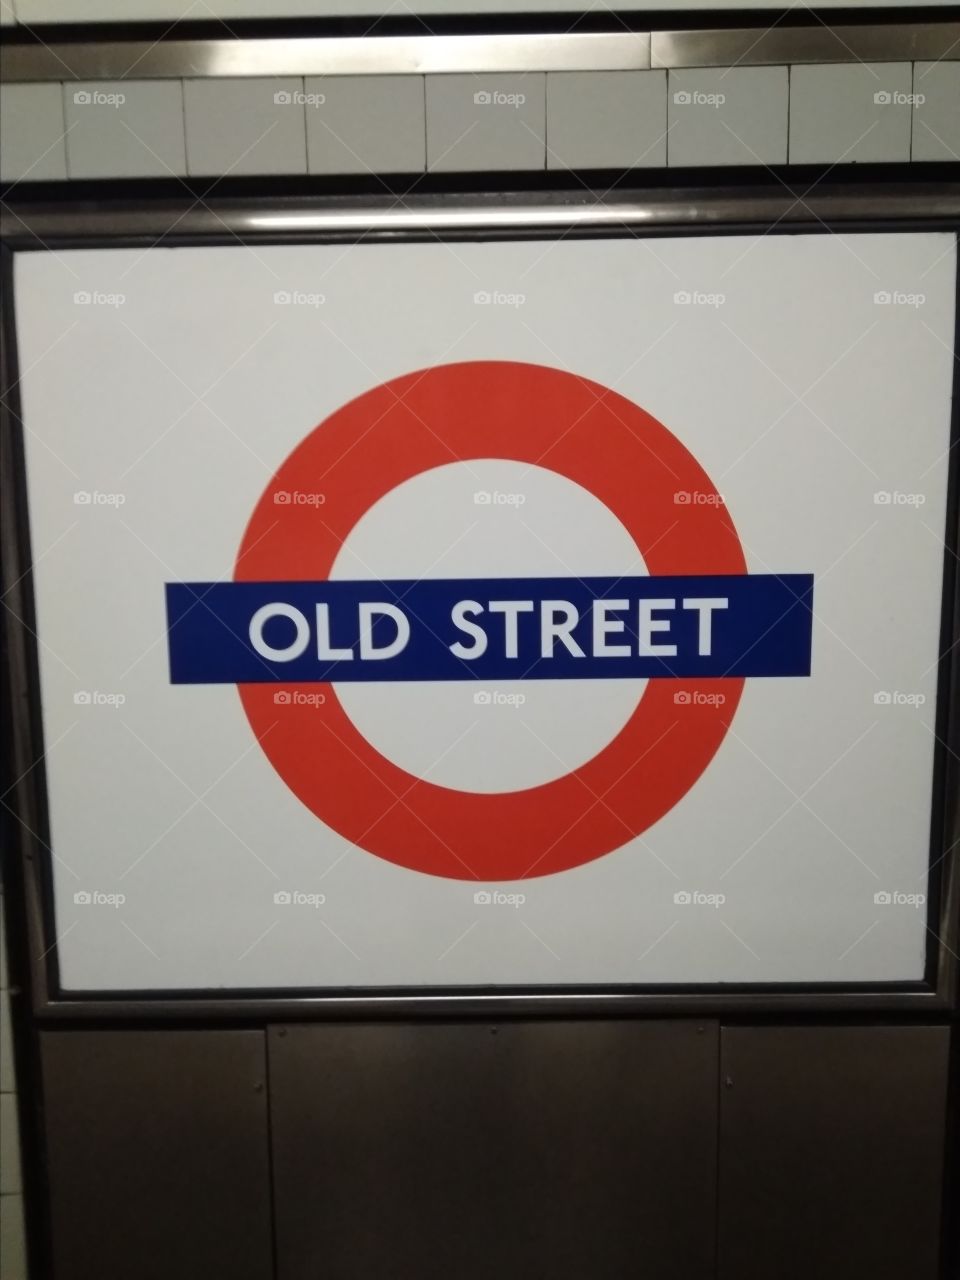 Old Street Station, London Underground